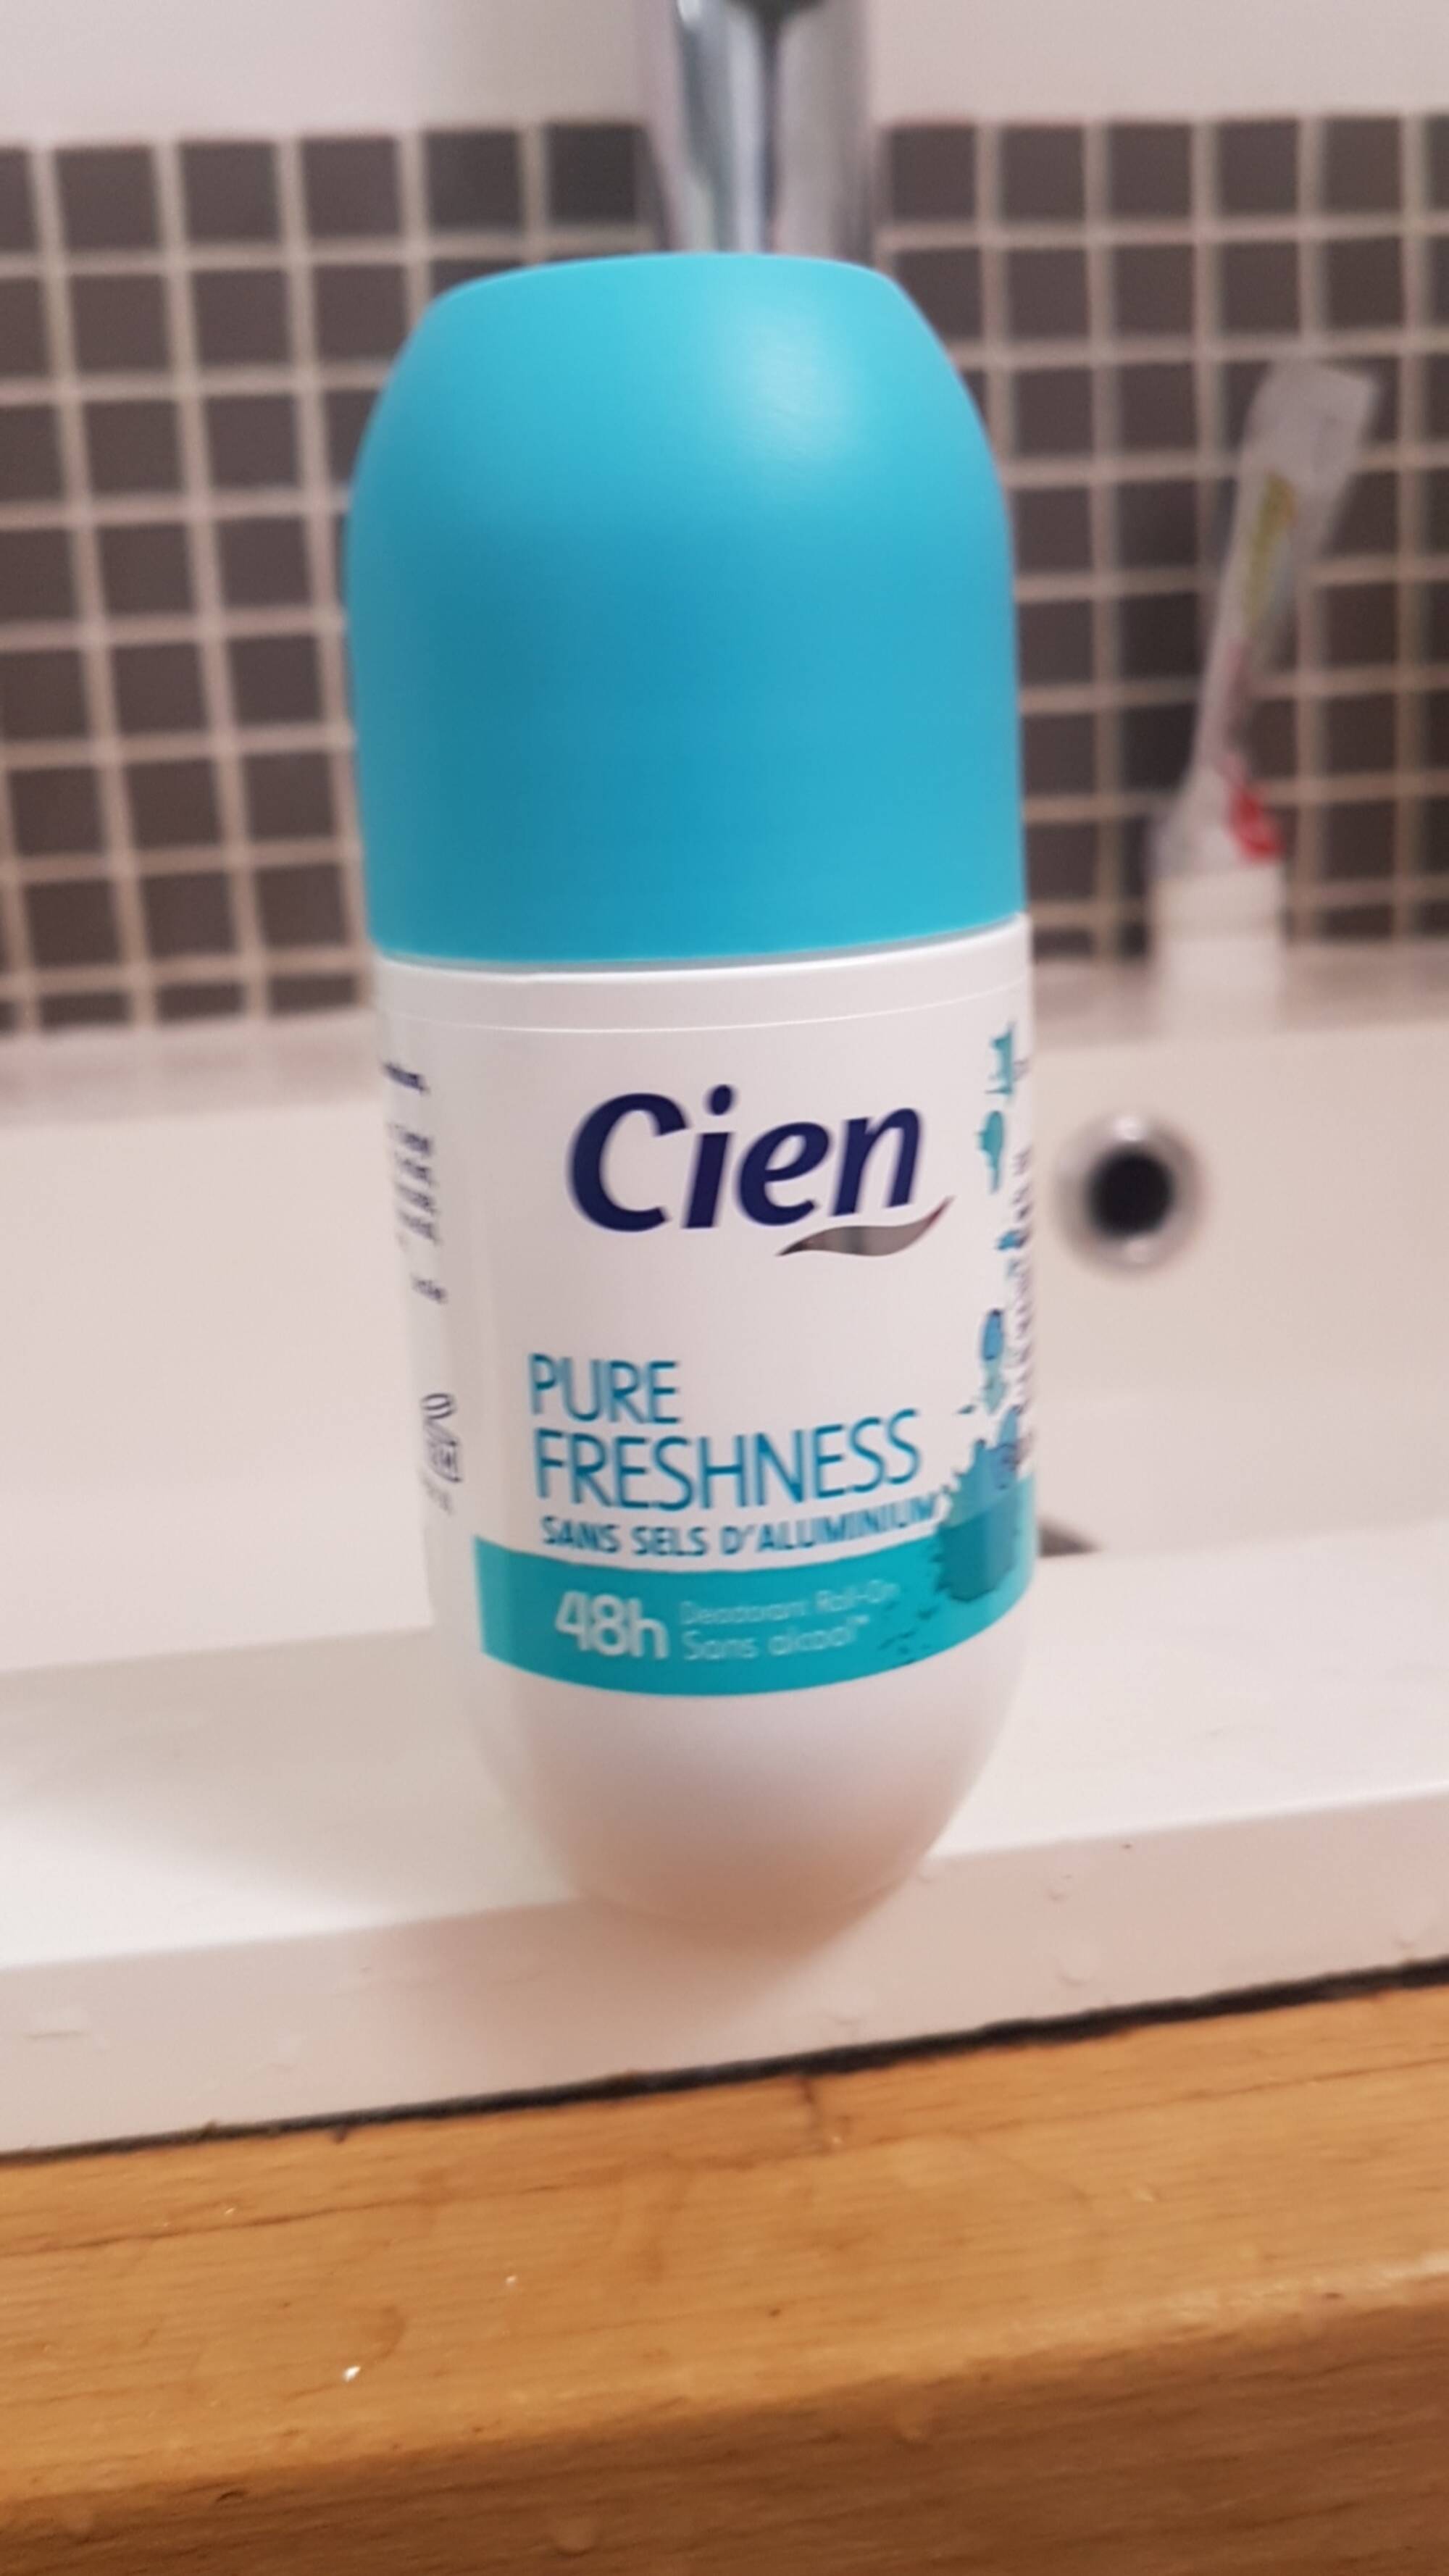 CIEN - Pure freshness sans sel d'aluminium